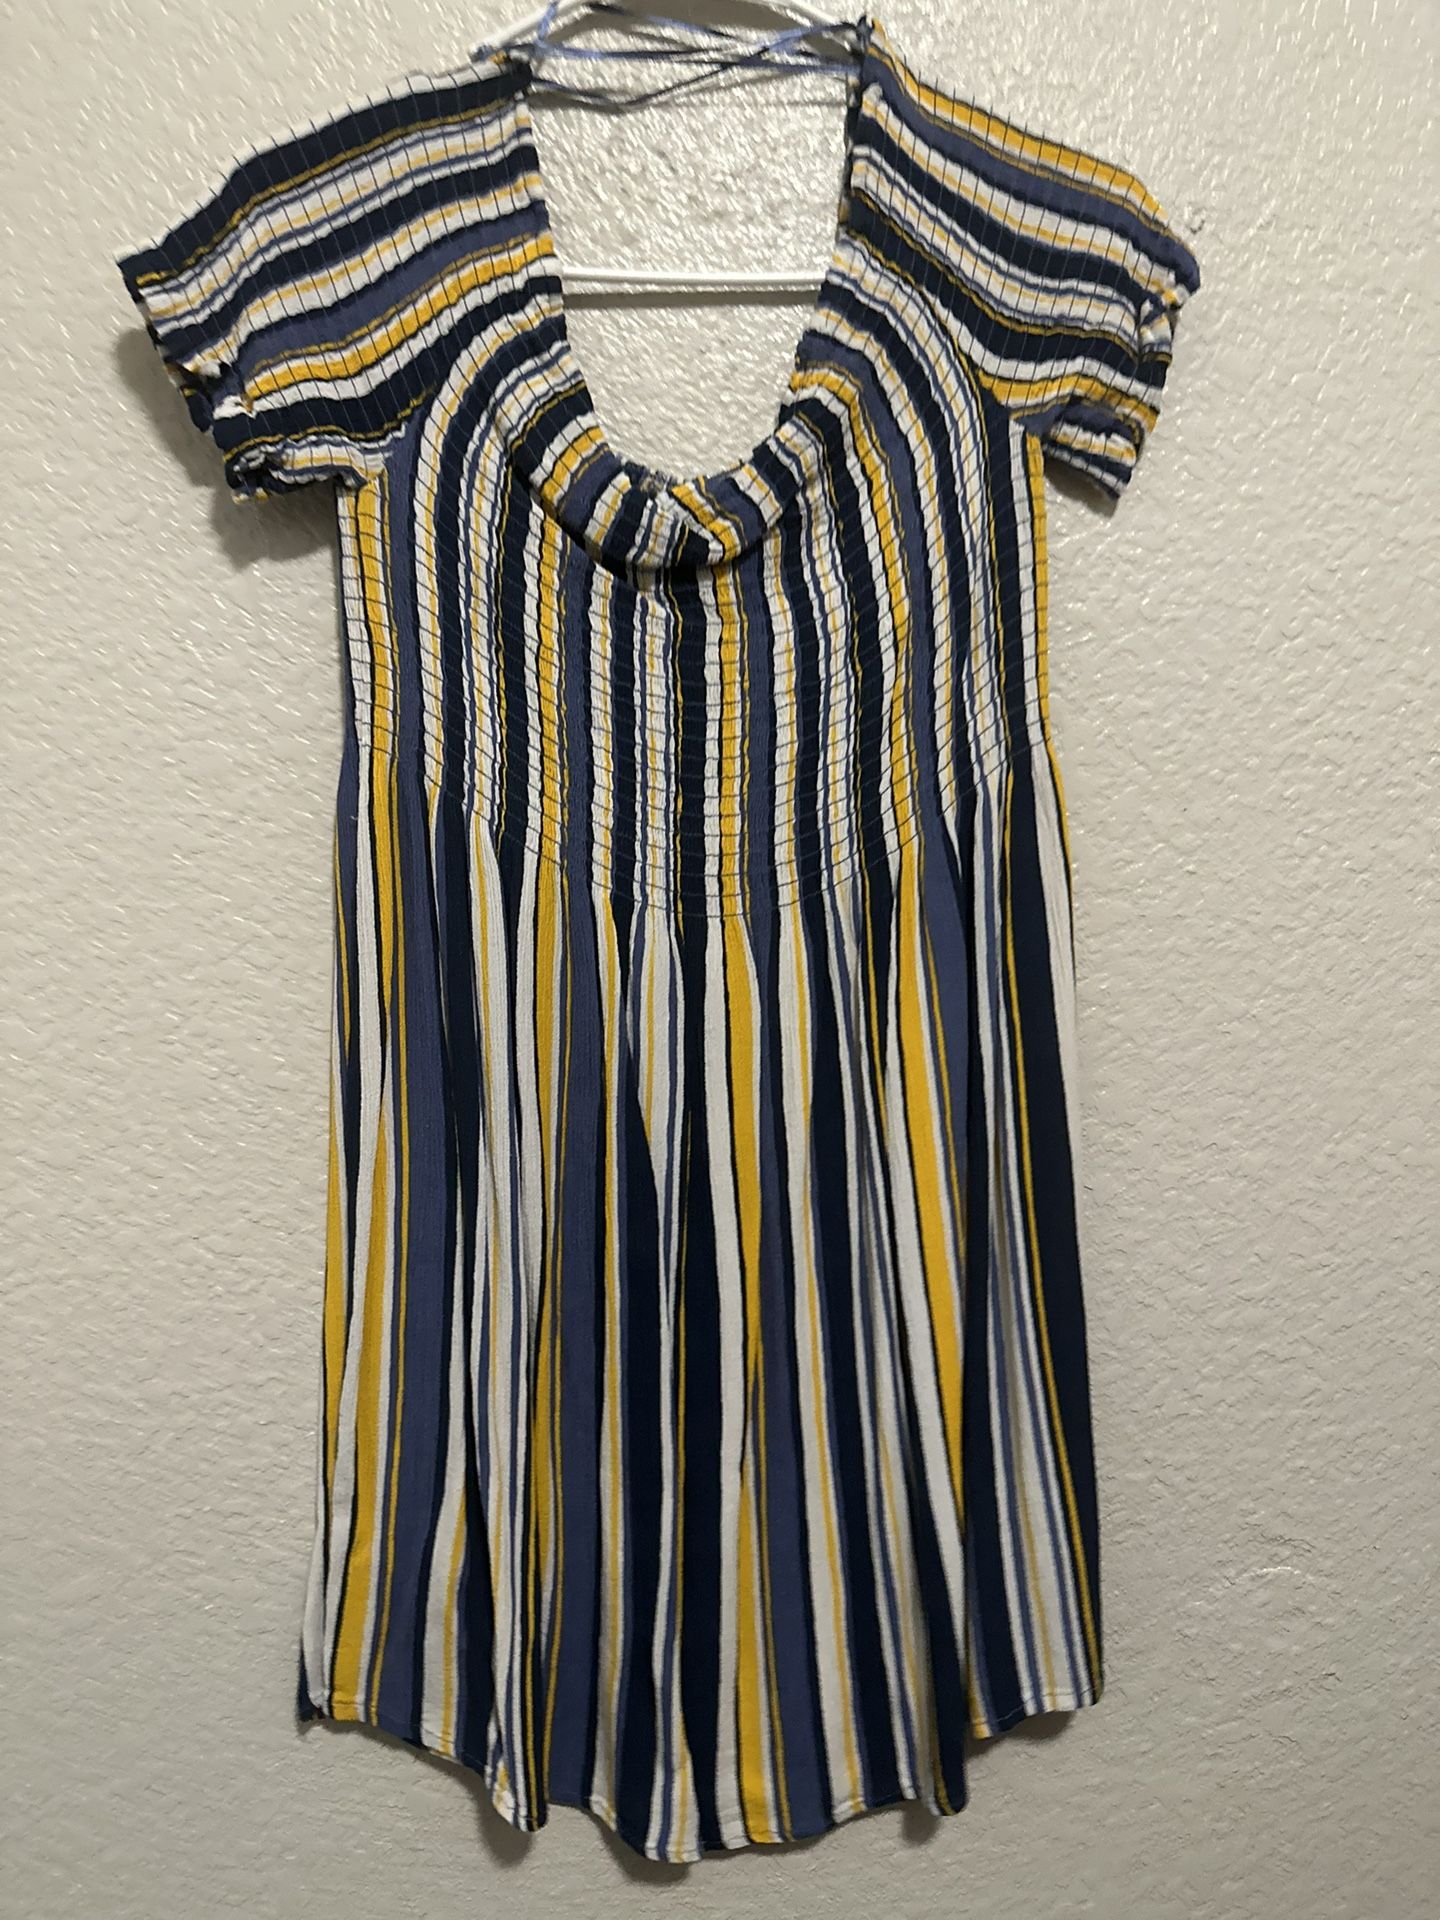 Striped yellow blue dress